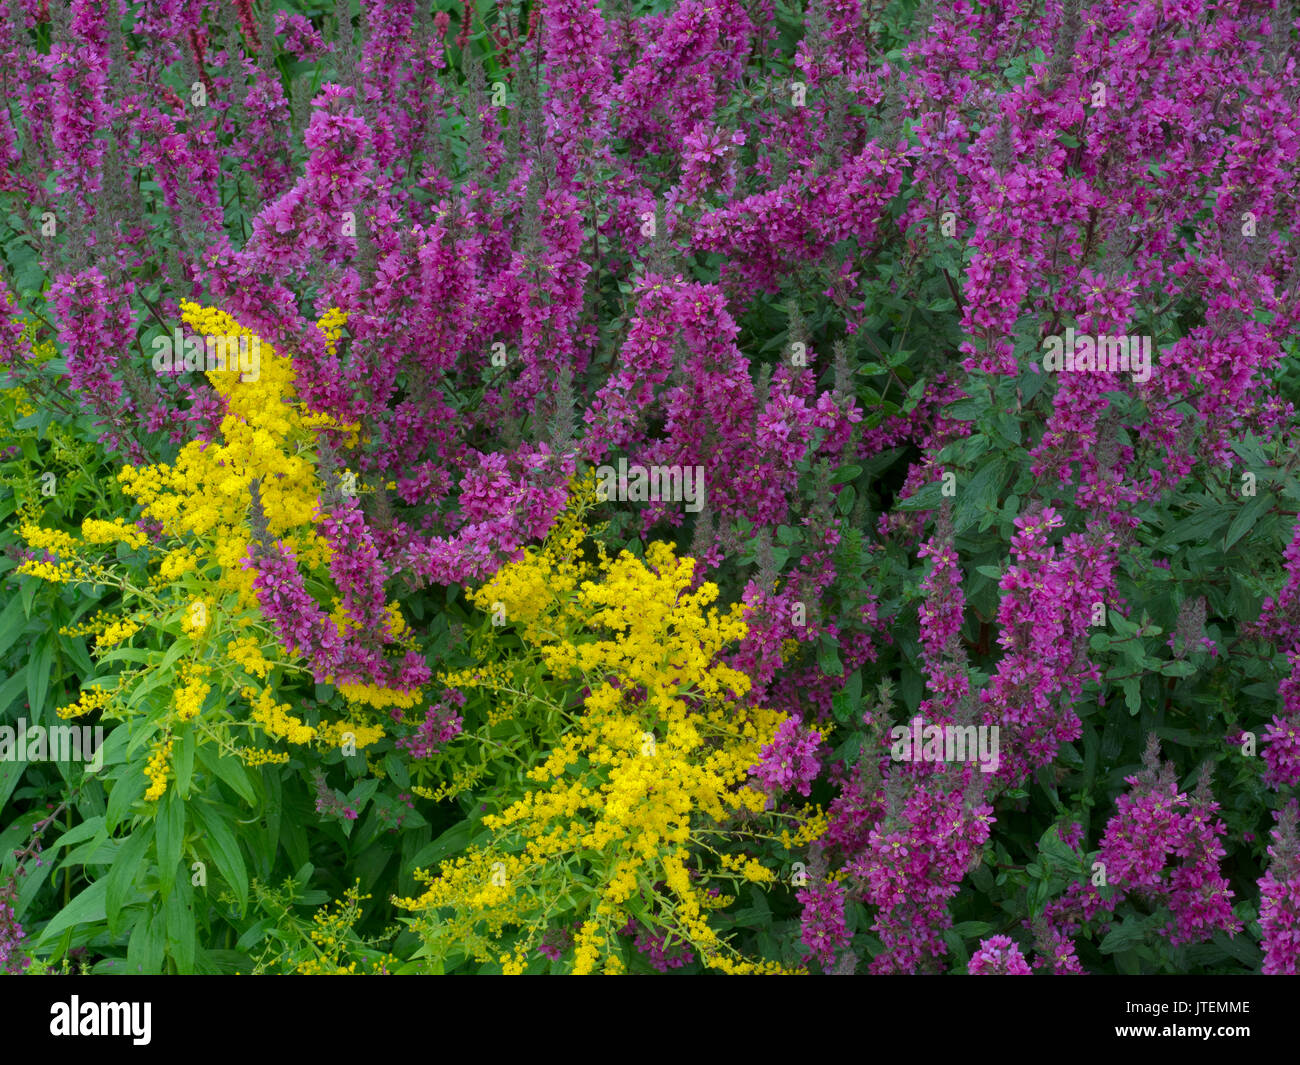 Lythrum virgatum 'Dropmore Purple' with Golden Rod in garden border Stock Photo